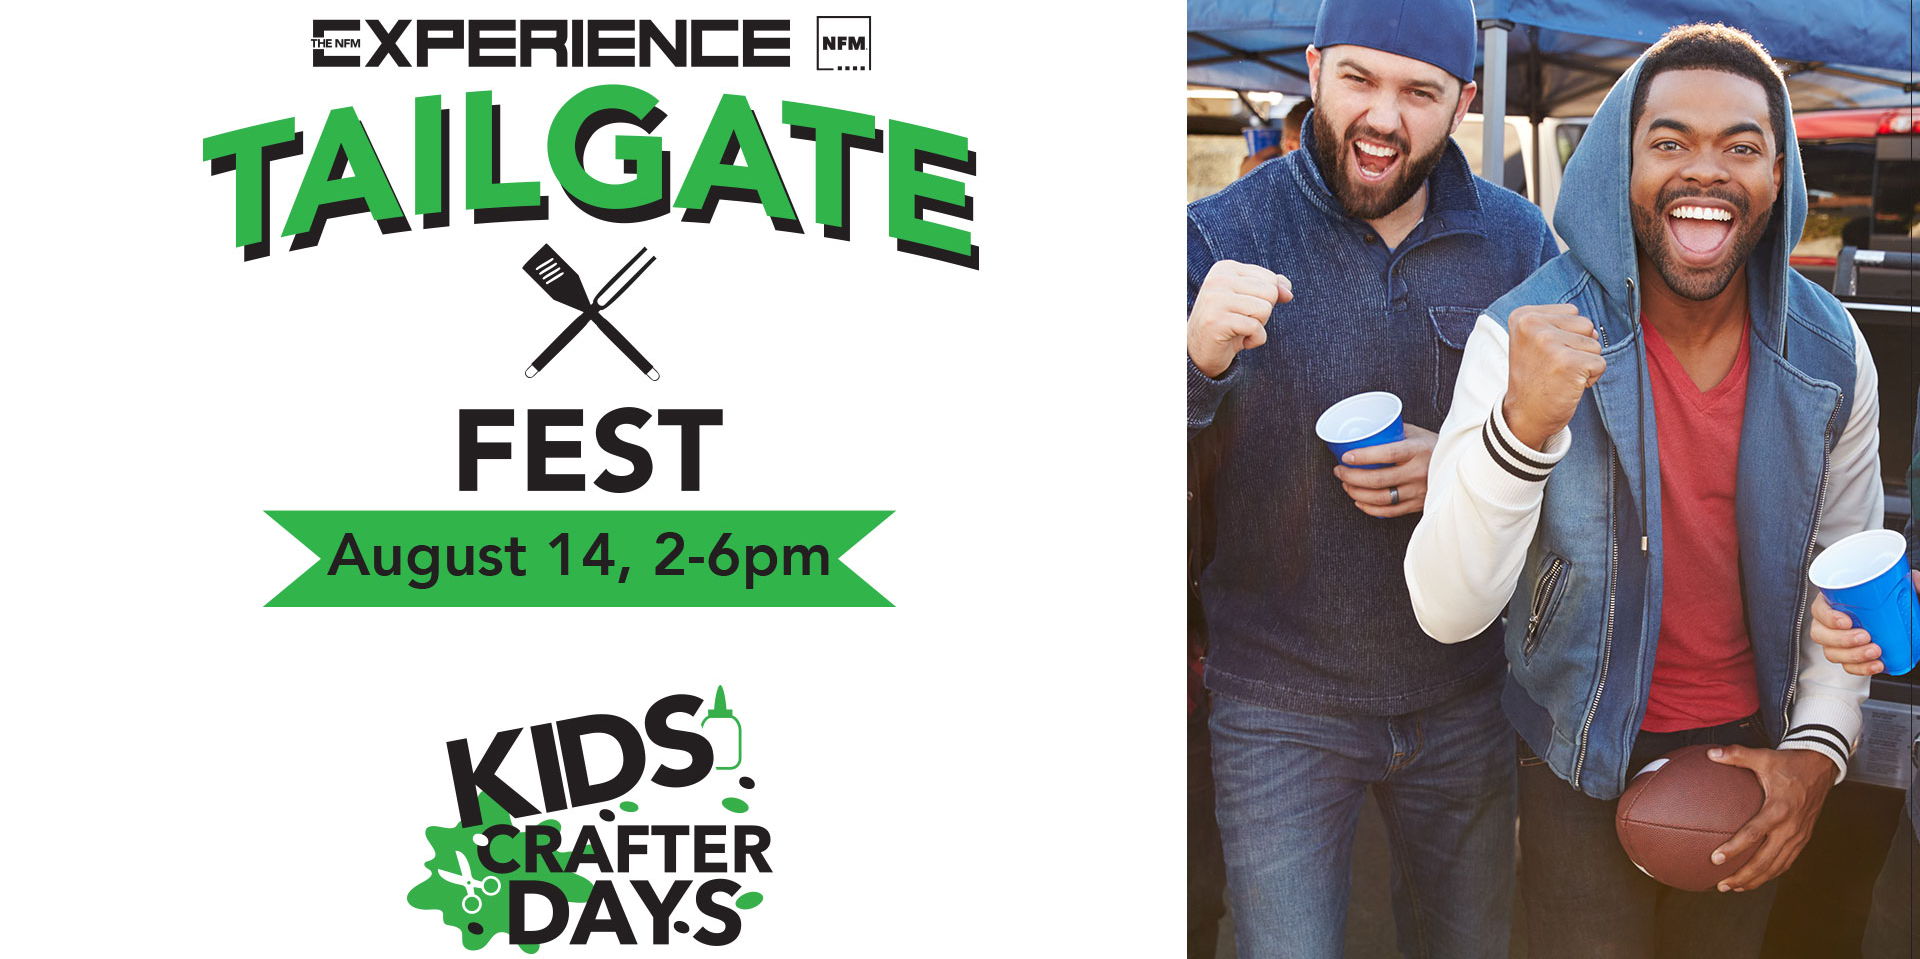 Tailgate Fest promotional image